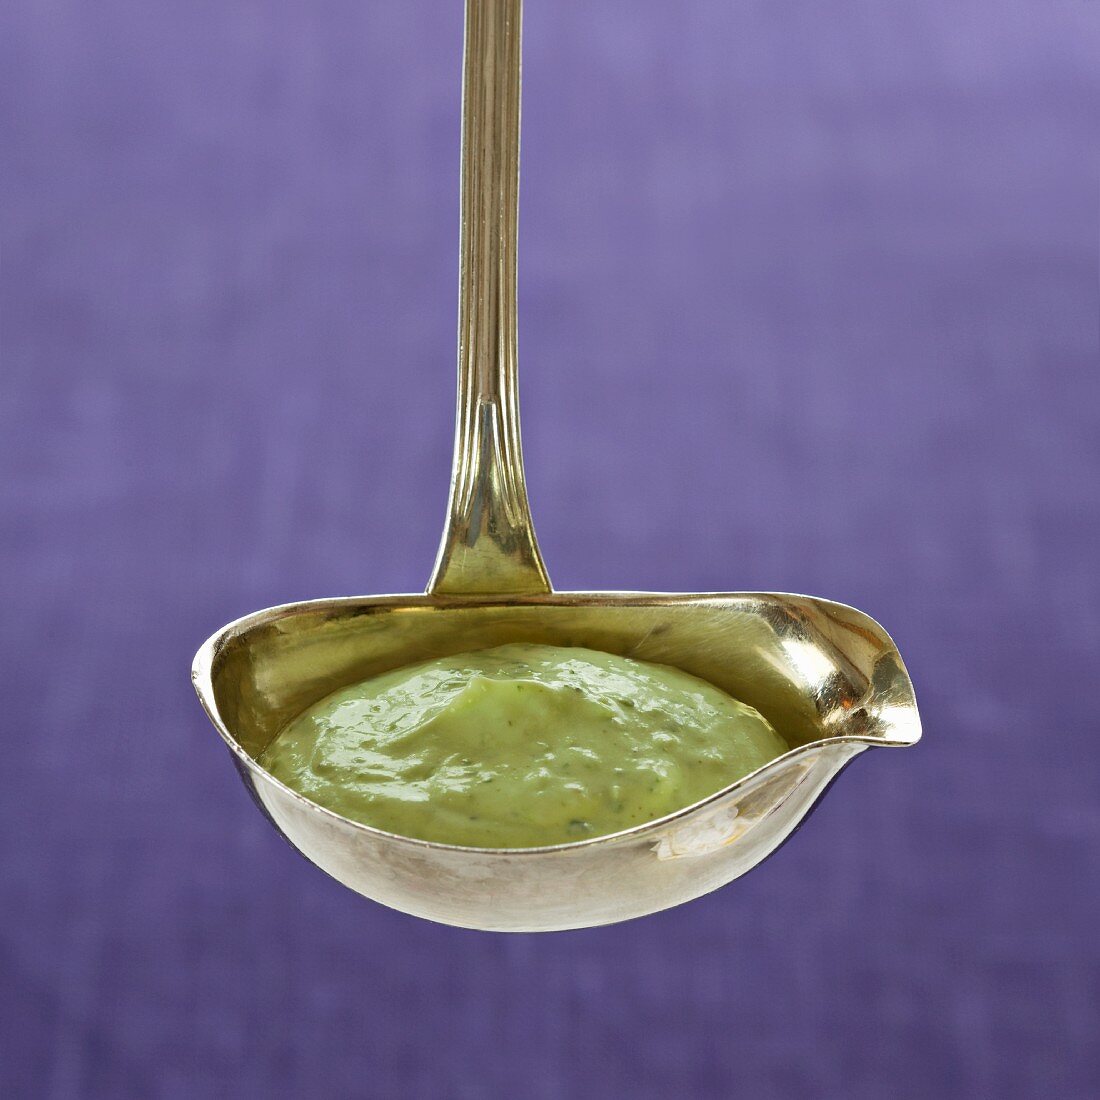 Herb yogurt sauce in a ladle